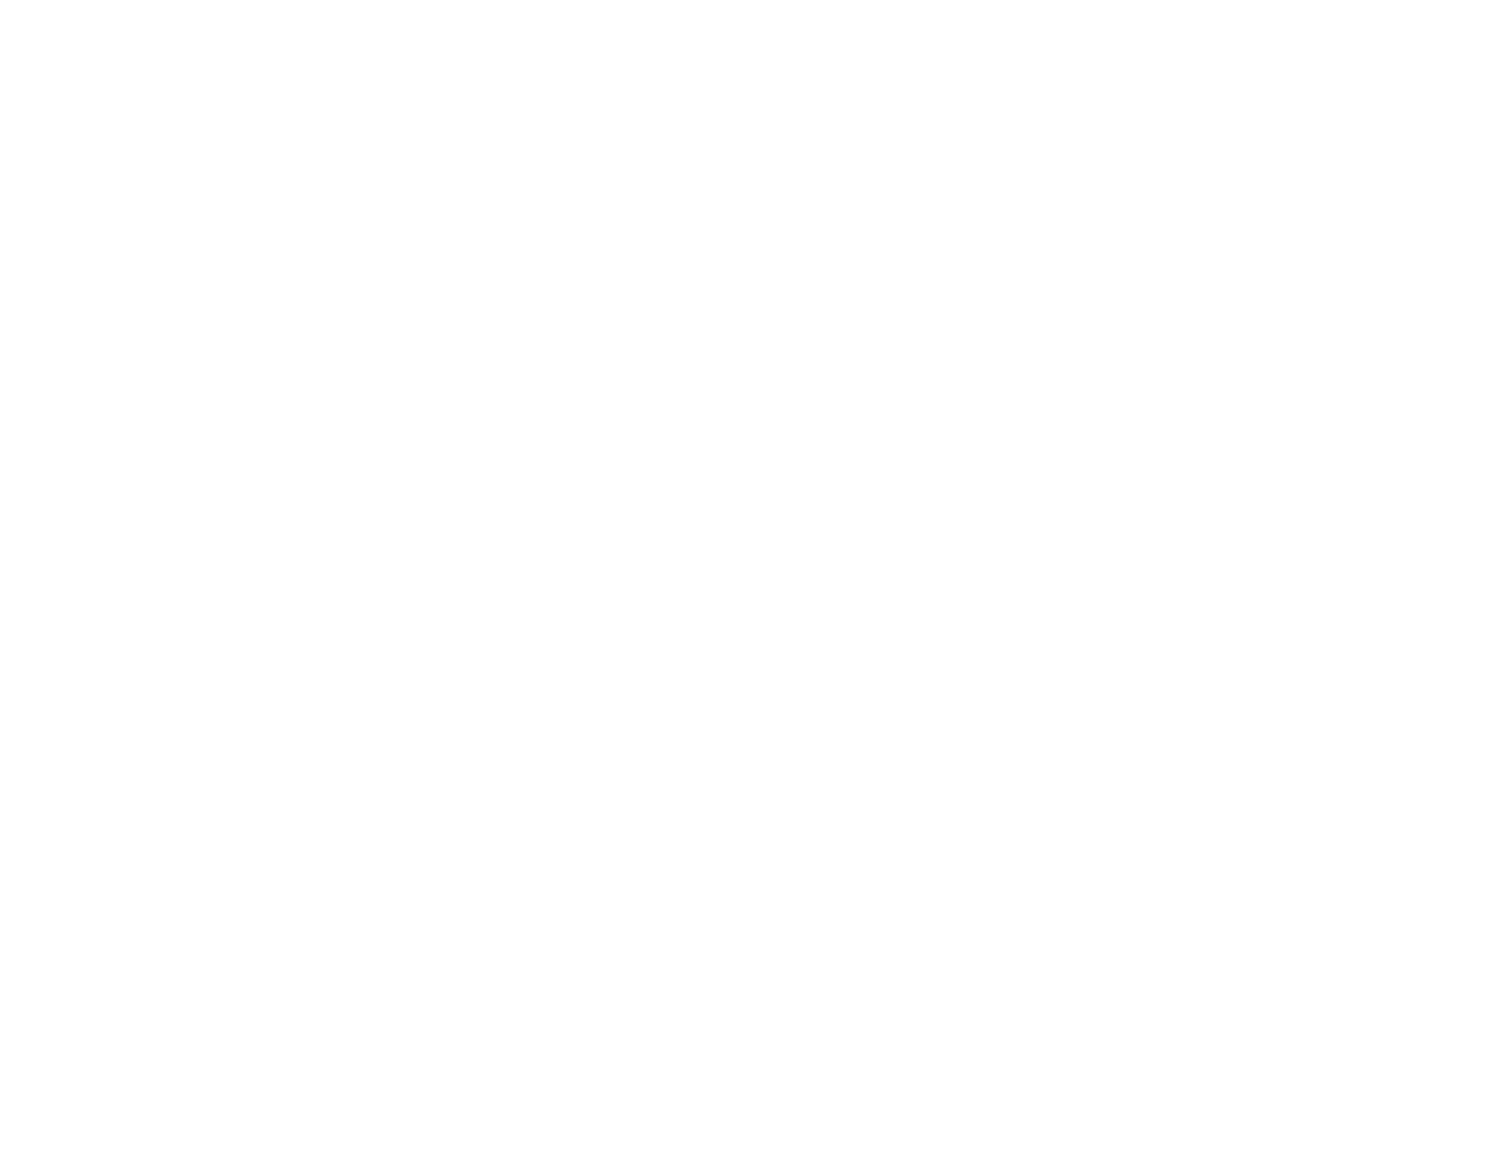 FCS Educational Foundation